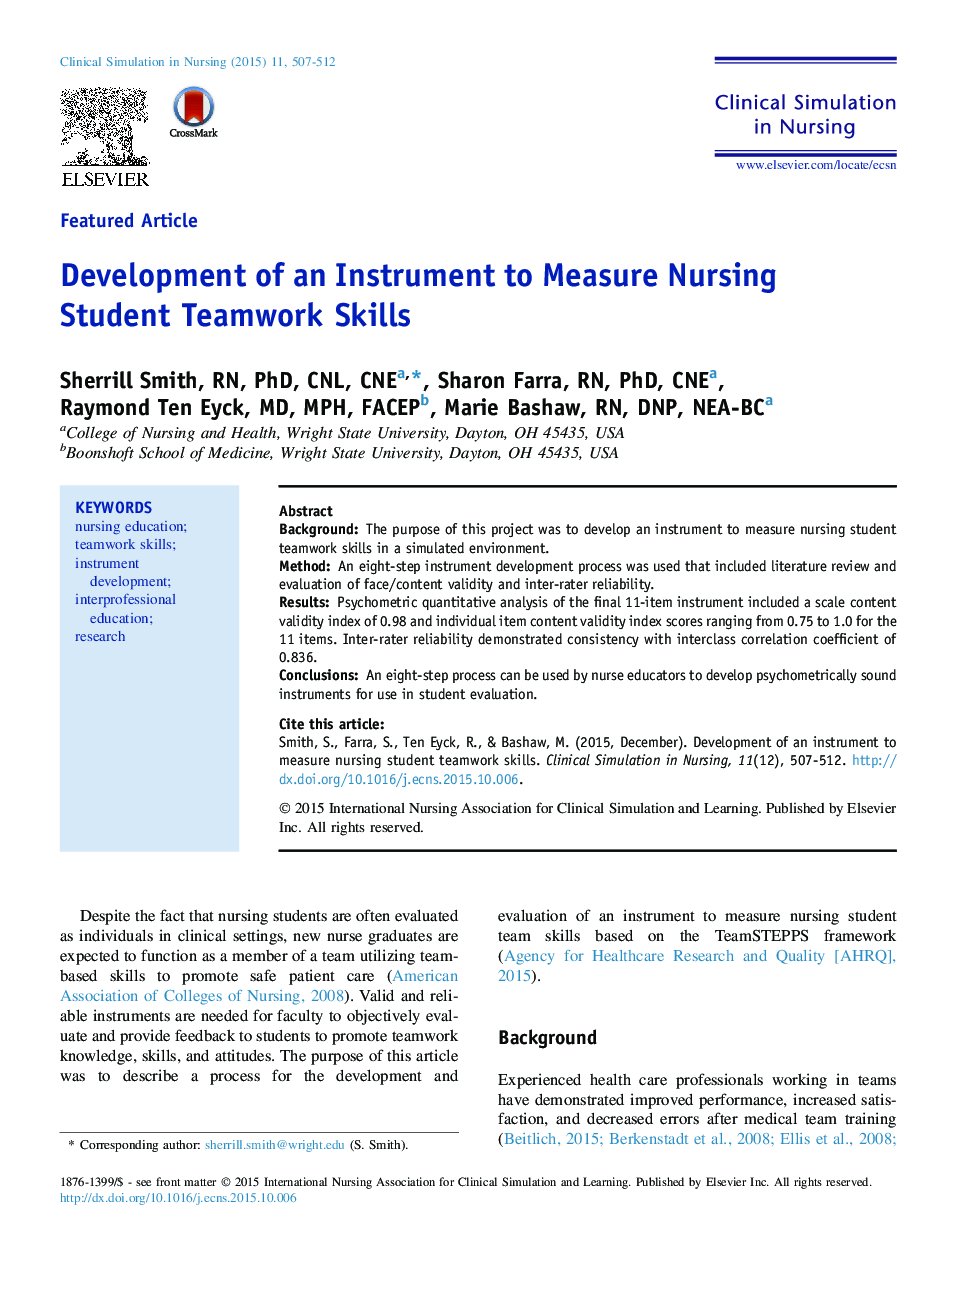 Development of an Instrument to Measure Nursing Student Teamwork Skills